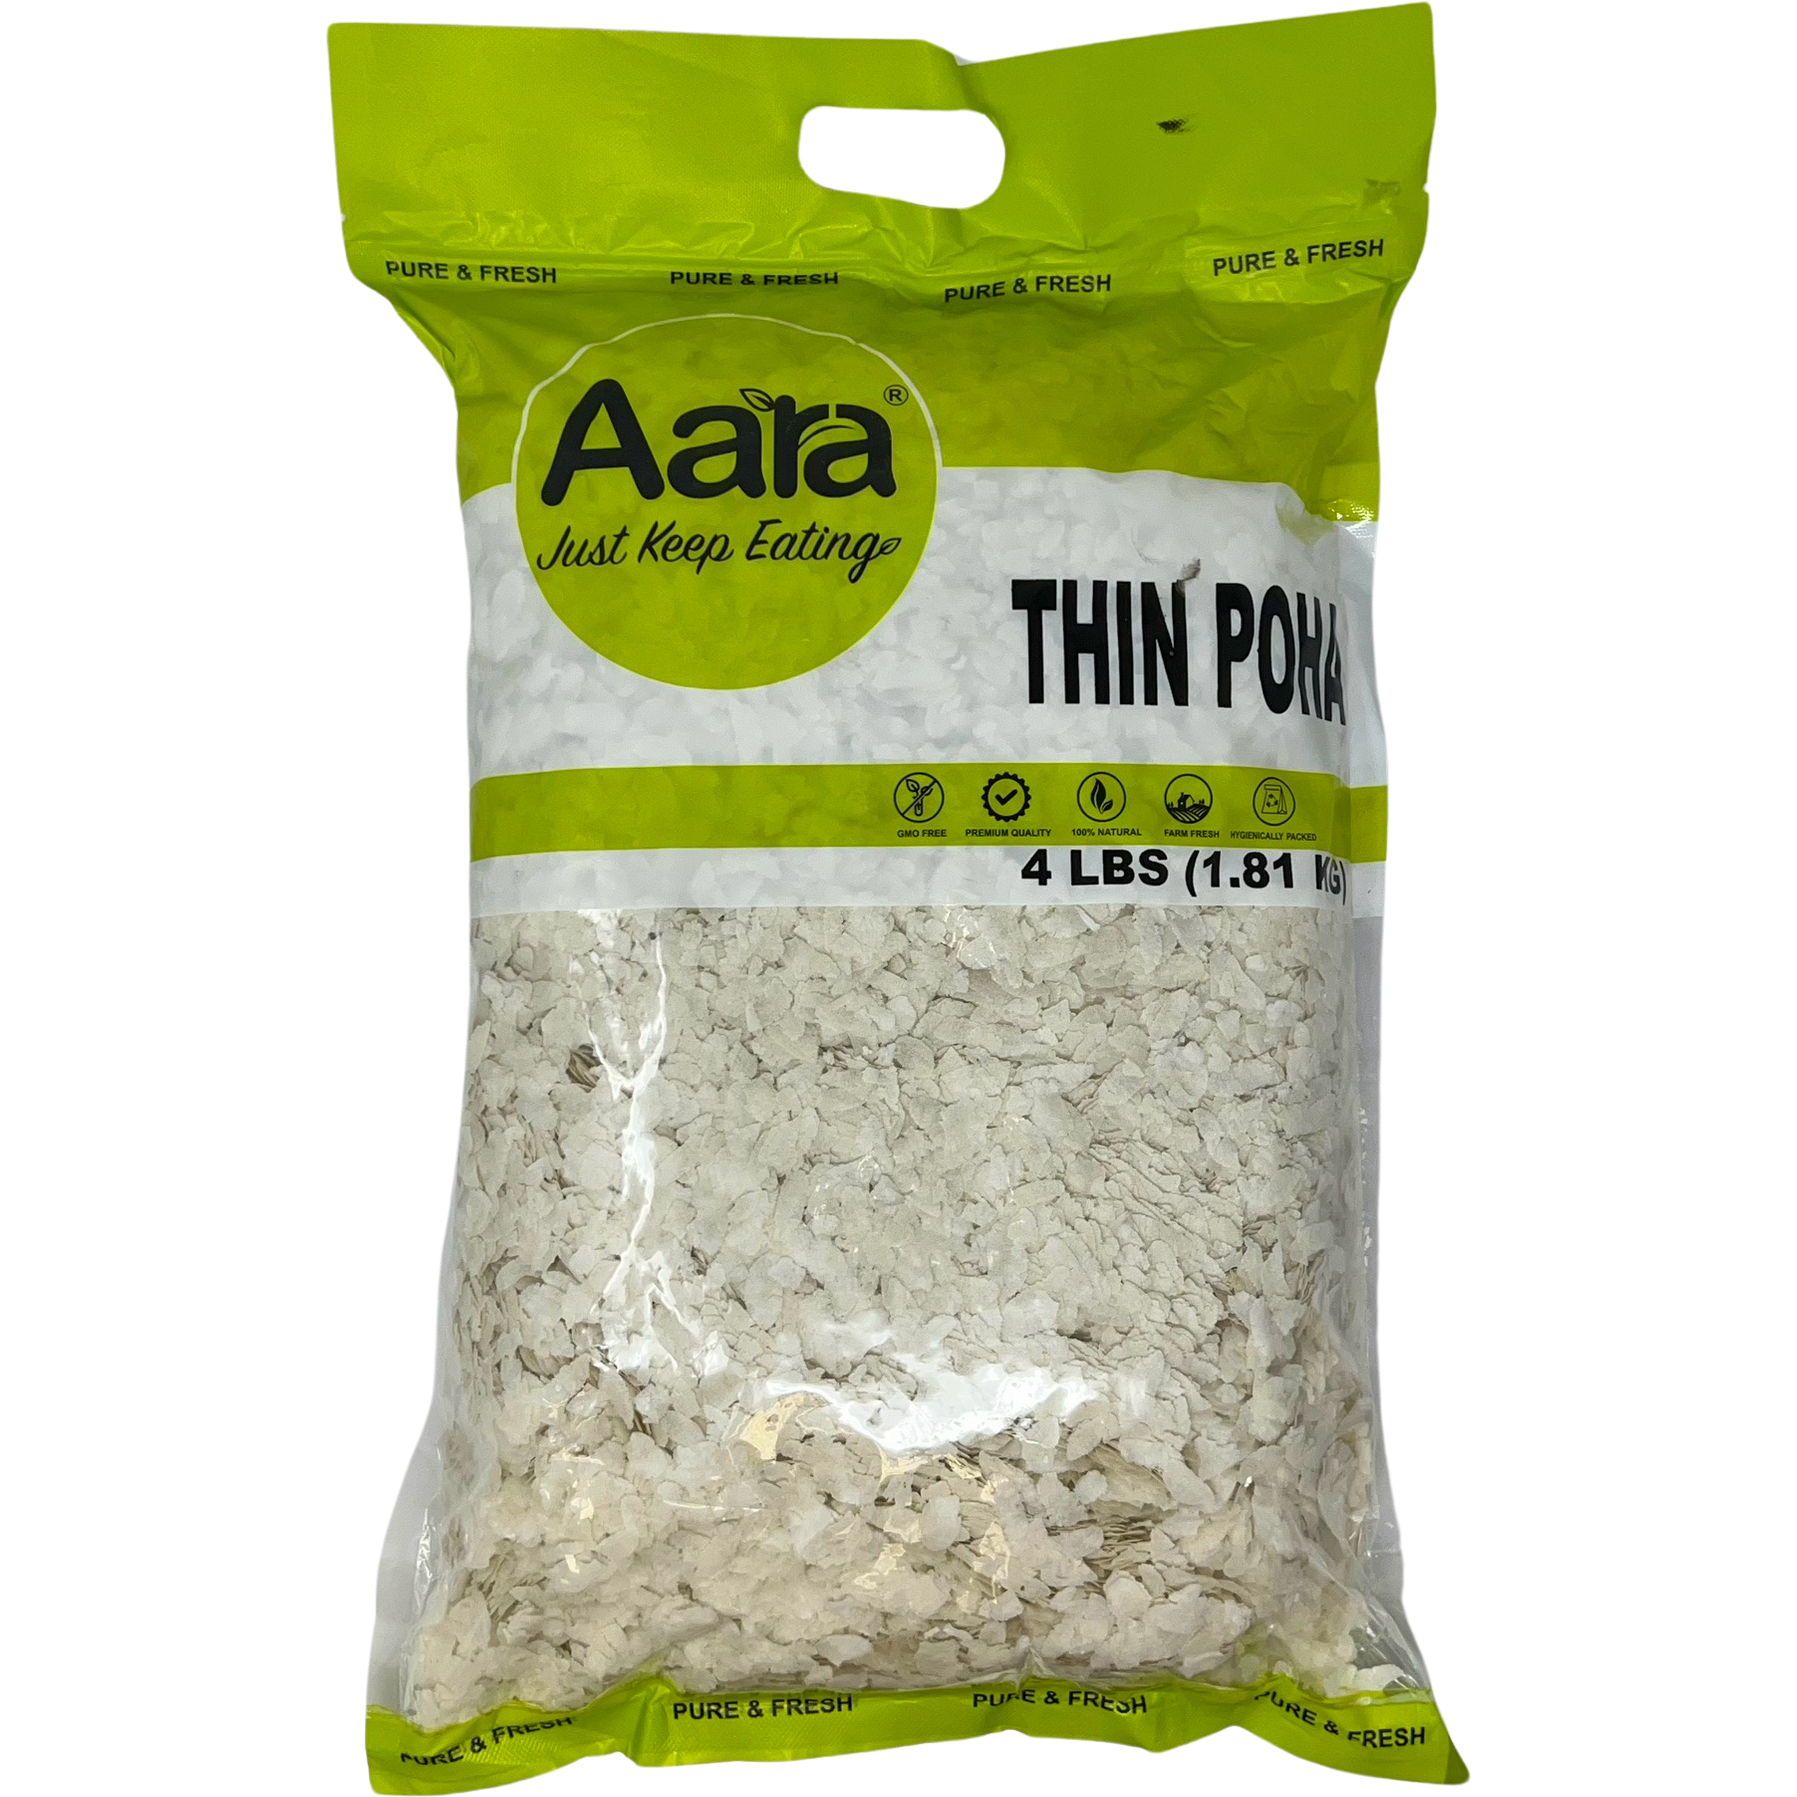 Pack of 2 - Aara Thin Poha - 4 Lb (1.81 Kg)